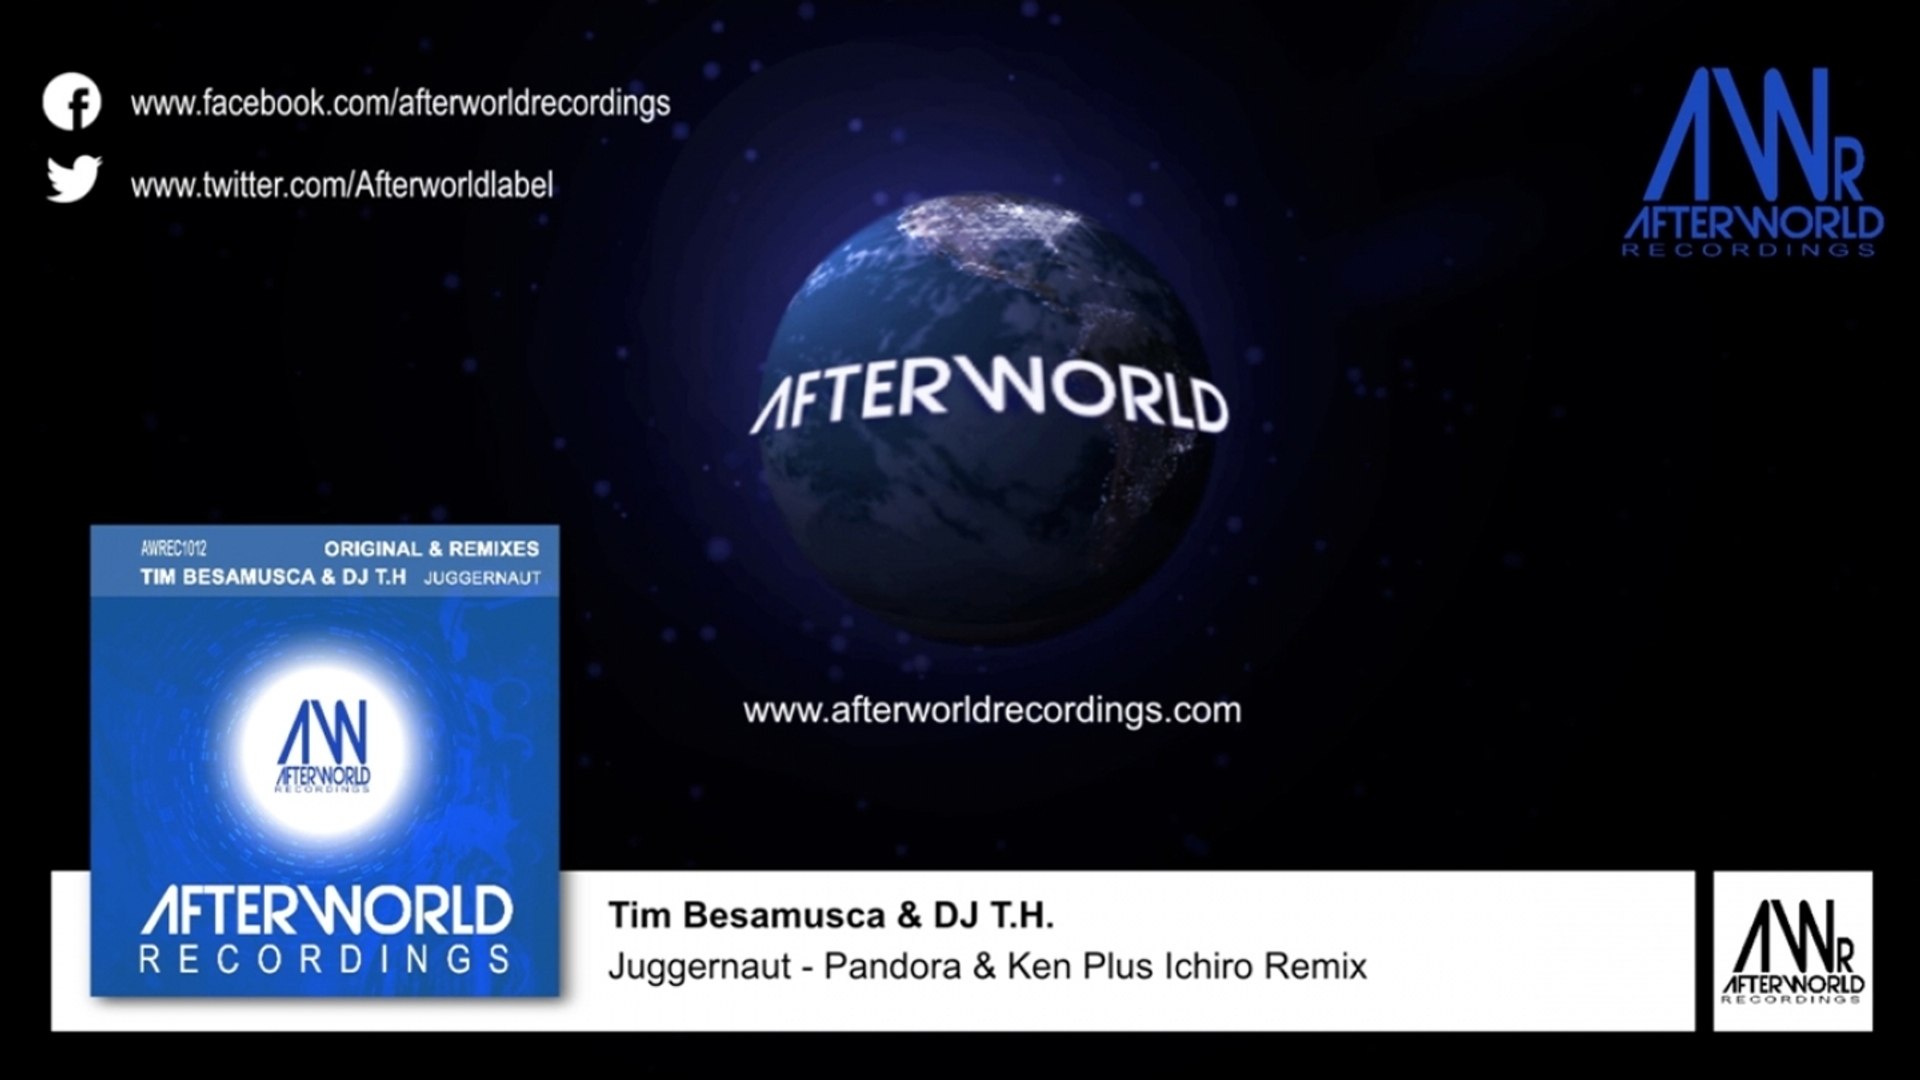 Tim Besamusca, DJ T. H. - Juggernaut - Pandora & Ken Plus Ichiro Remix  [Official Pr Video] Awrec1012 - Vidéo Dailymotion